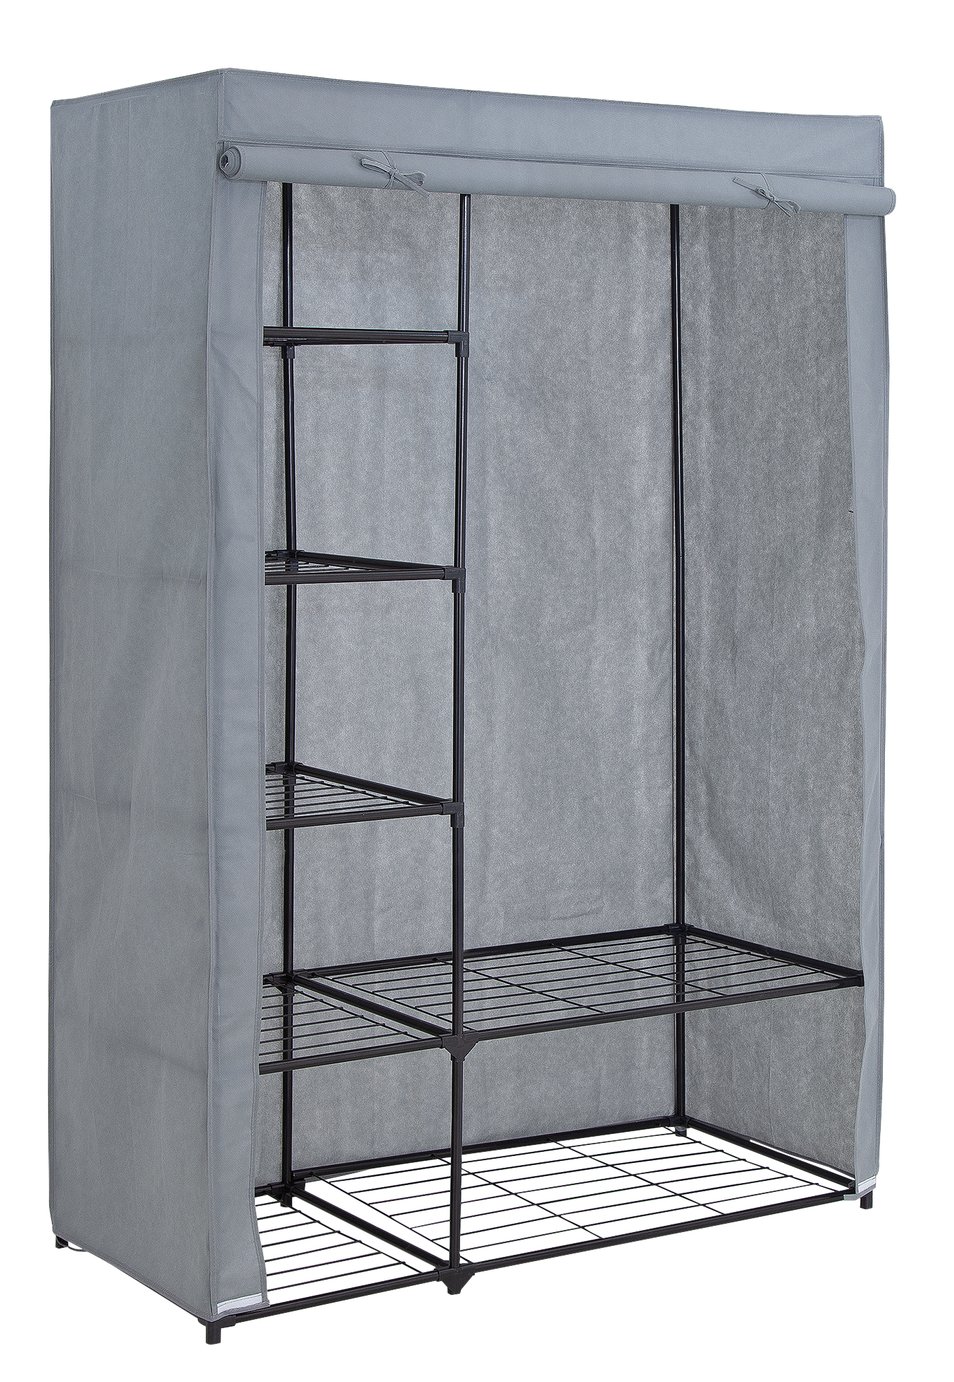 Argos Home Double Metal Framed Fabric Wardrobe - Grey